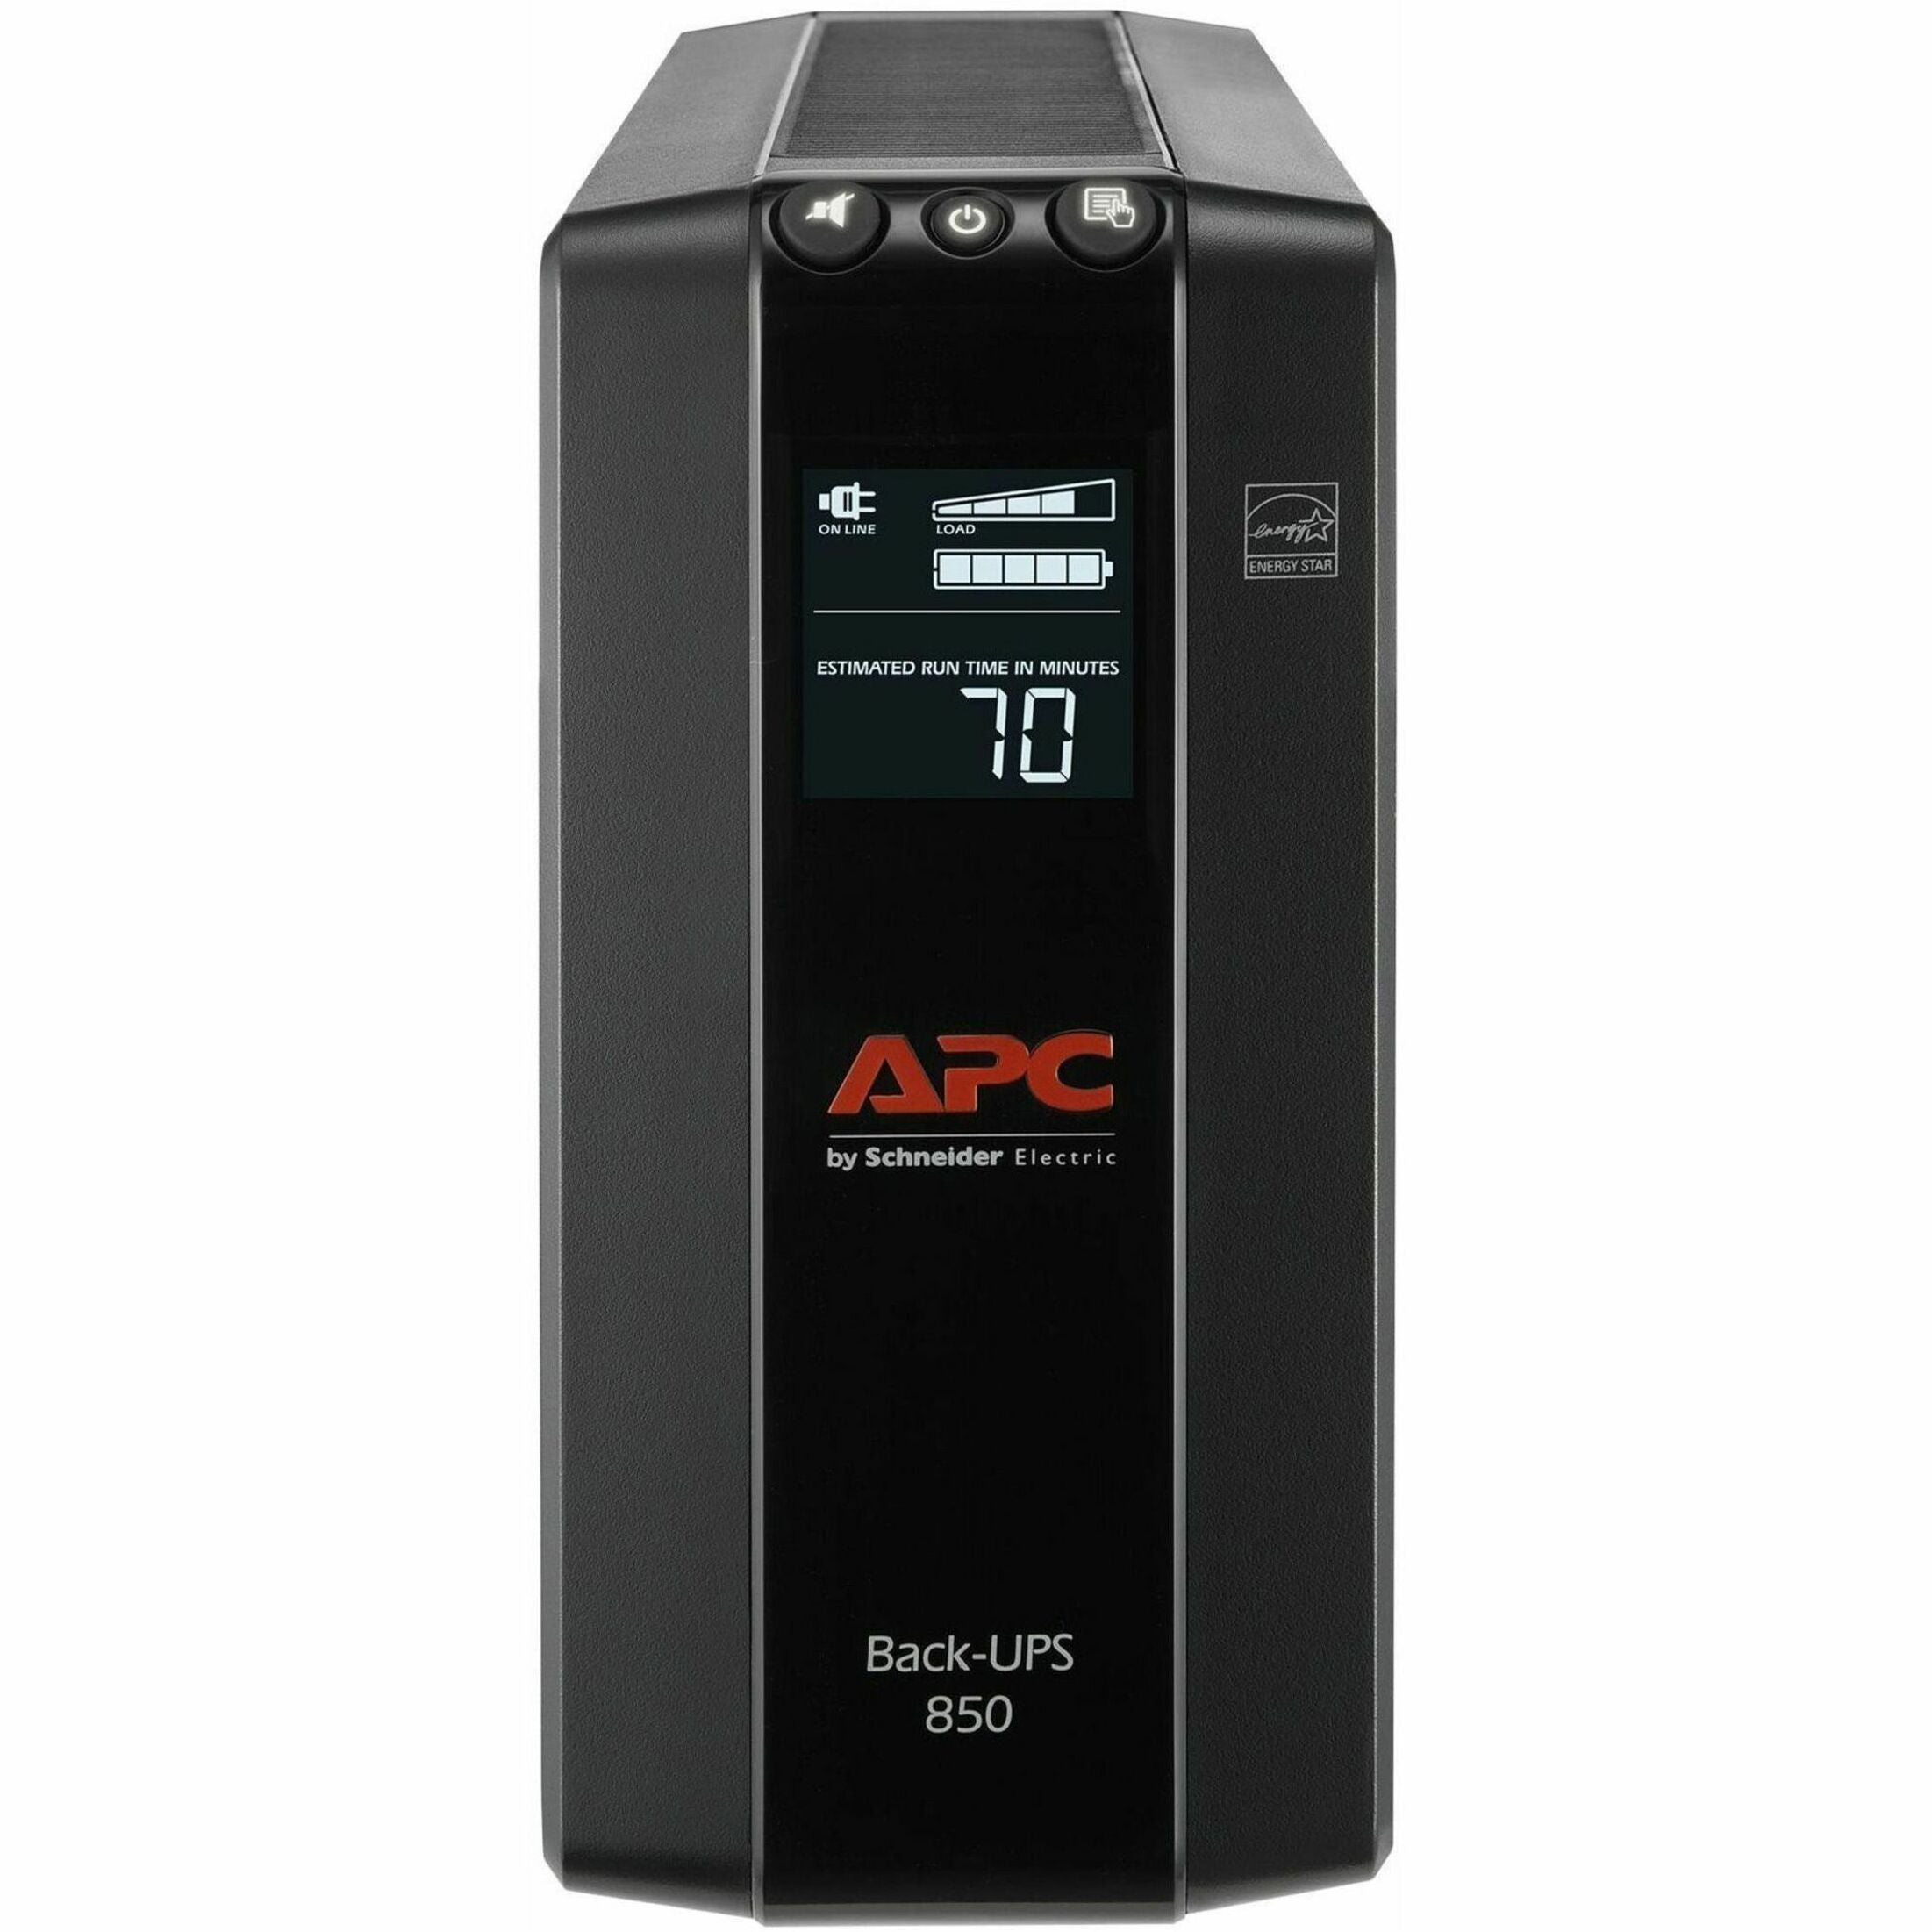 APC BX850M Back-UPS Pro Compact Tower 850VA AVR LCD 120V, Energy Star, 3 Year Warranty